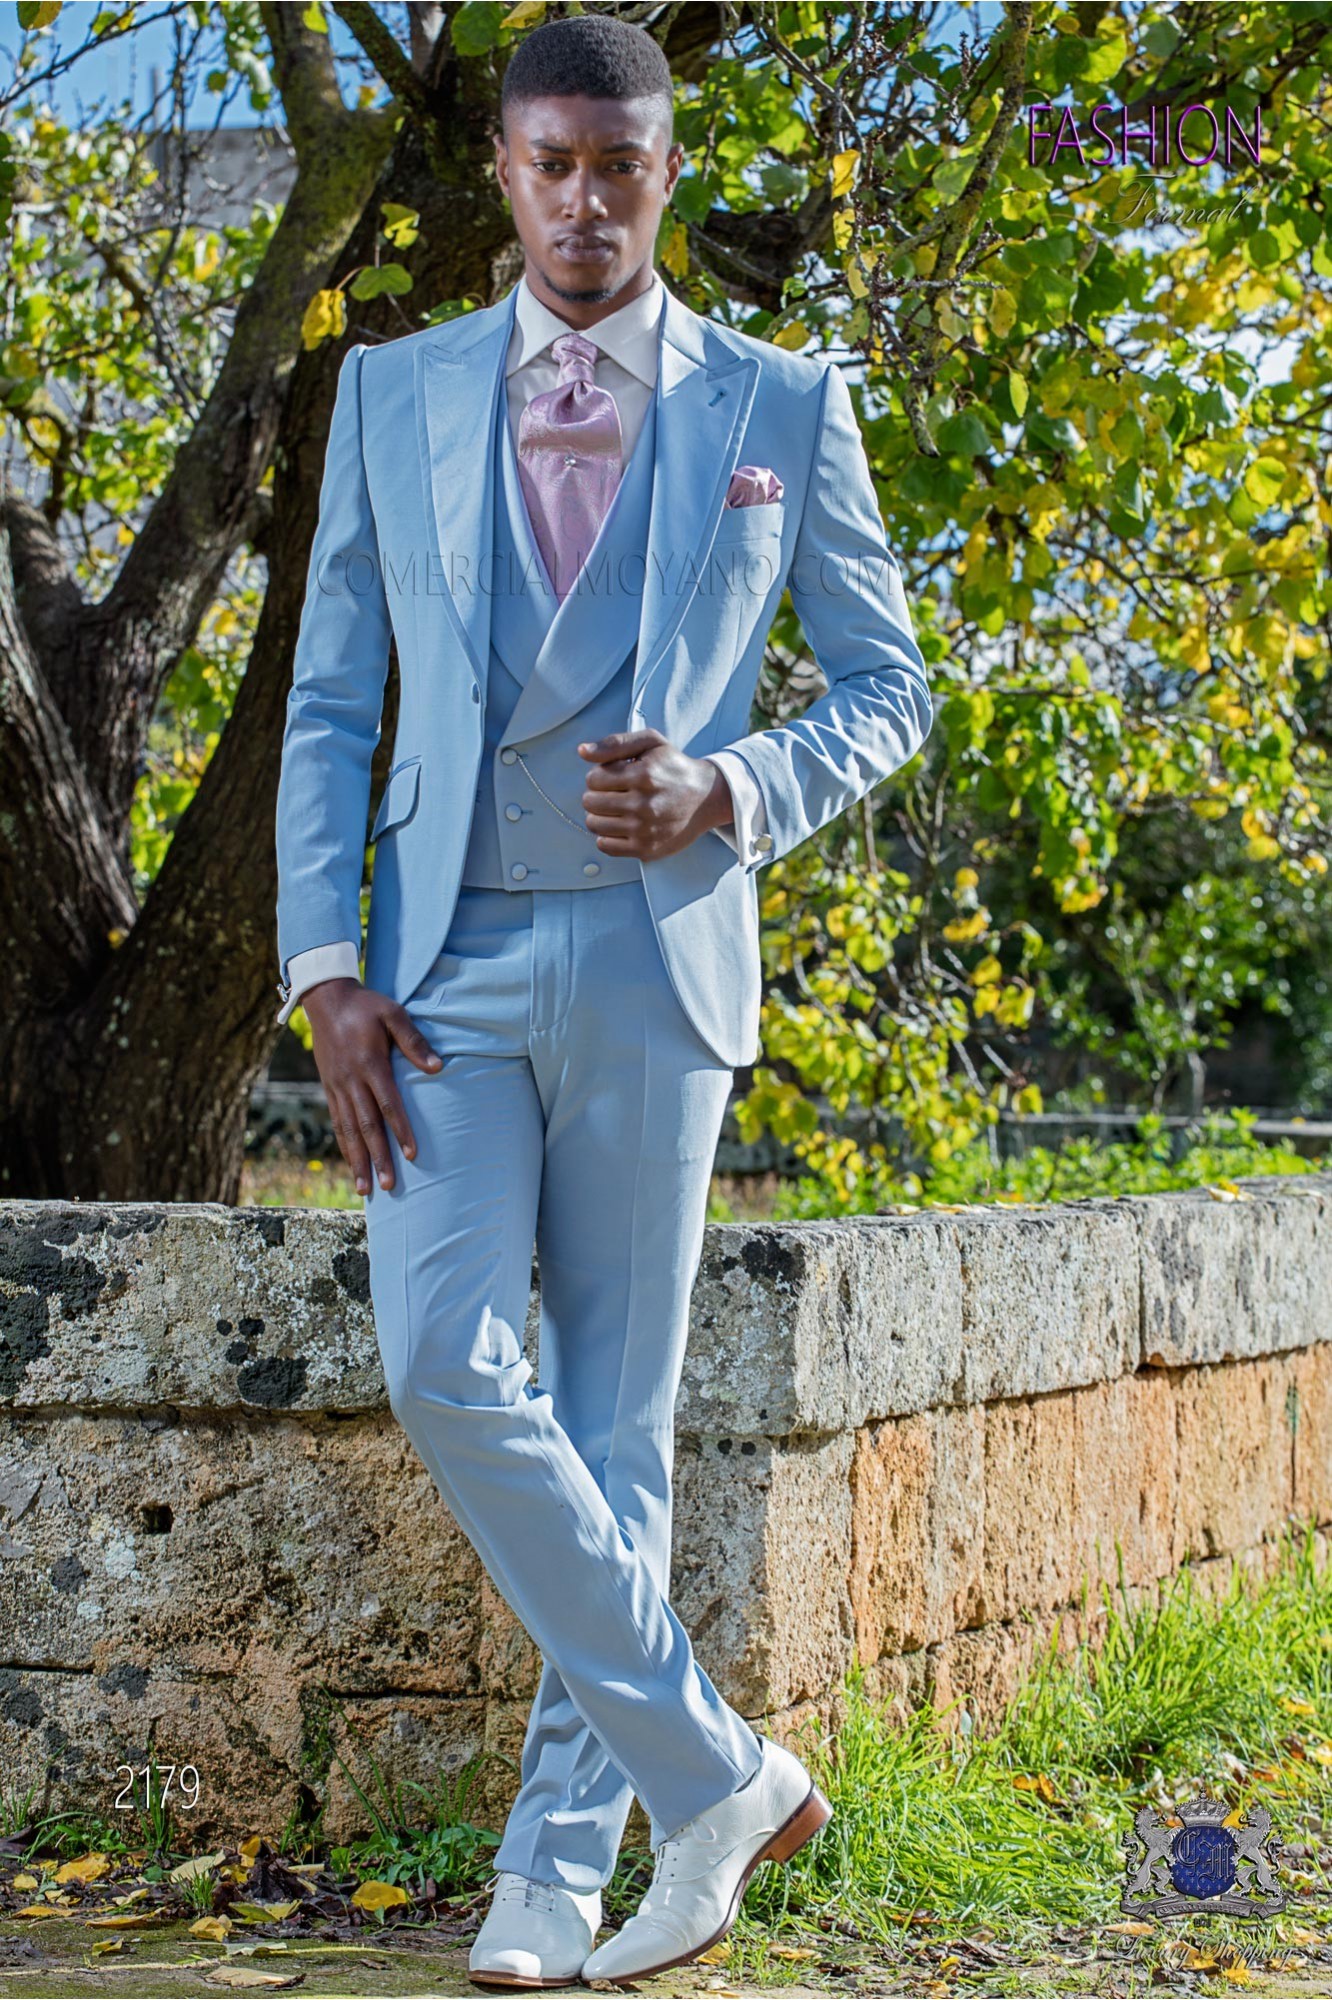 Traje de novio slim azul celeste con solapas en raso modelo: 2179 Mario Moyano colección Fashion